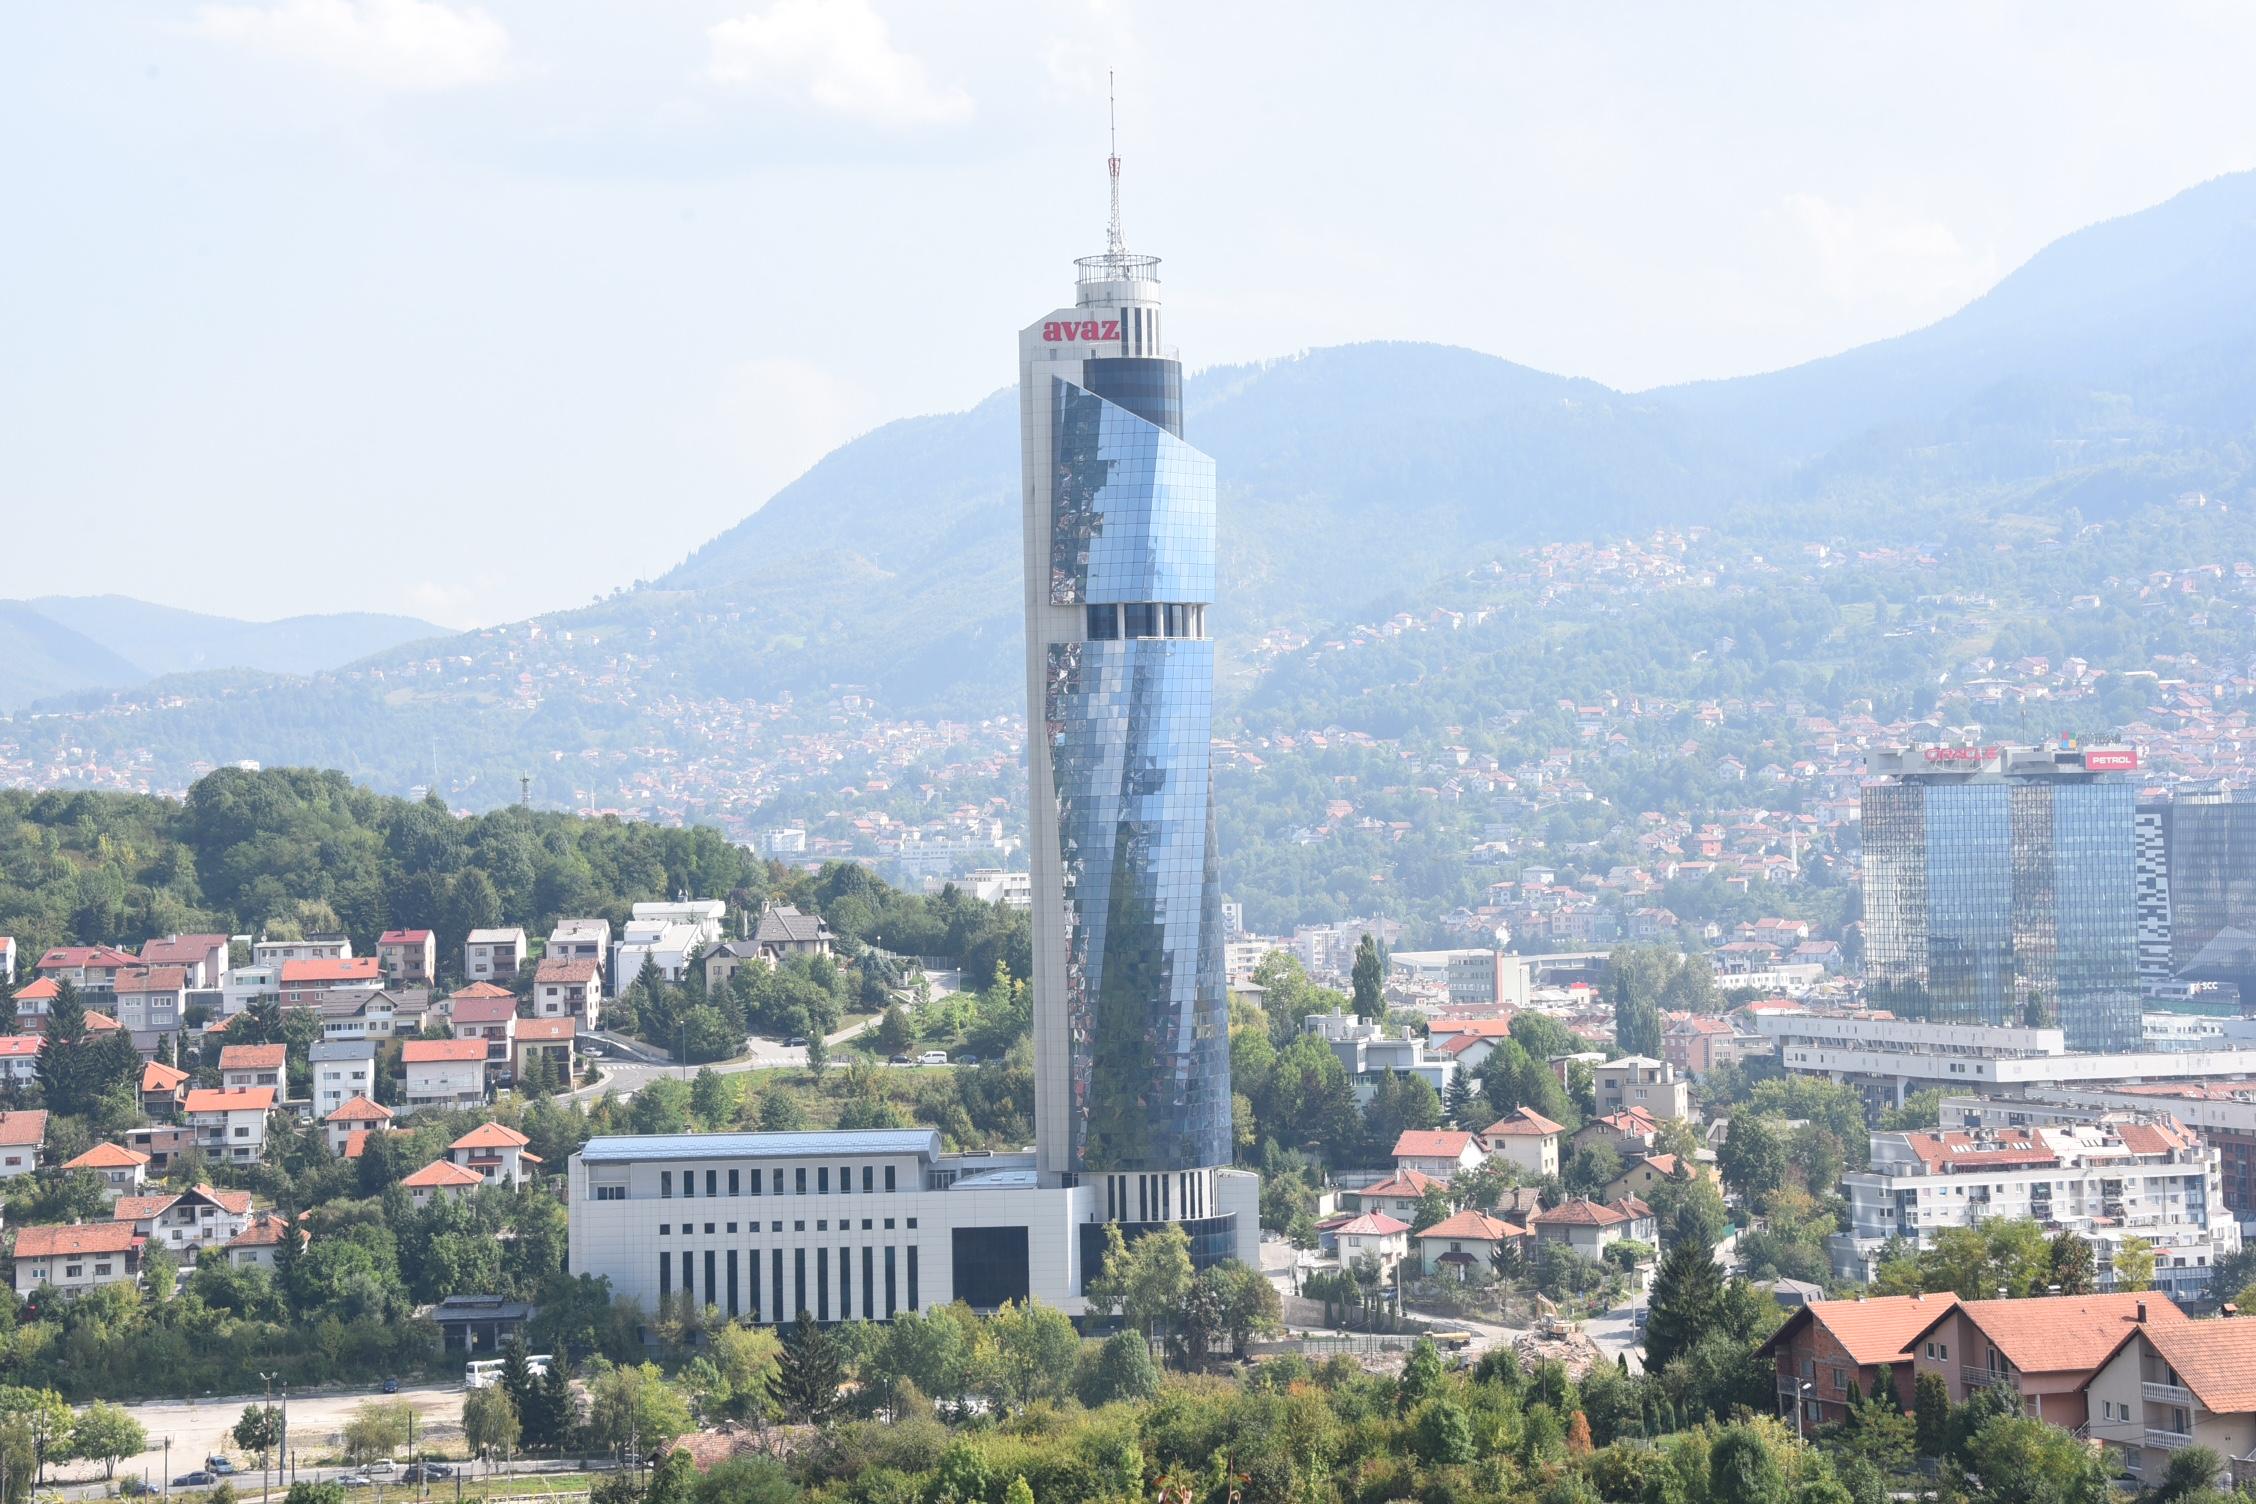 Iznad Sarajeva se uzdiže “Avaz Twist Tower” - Avaz